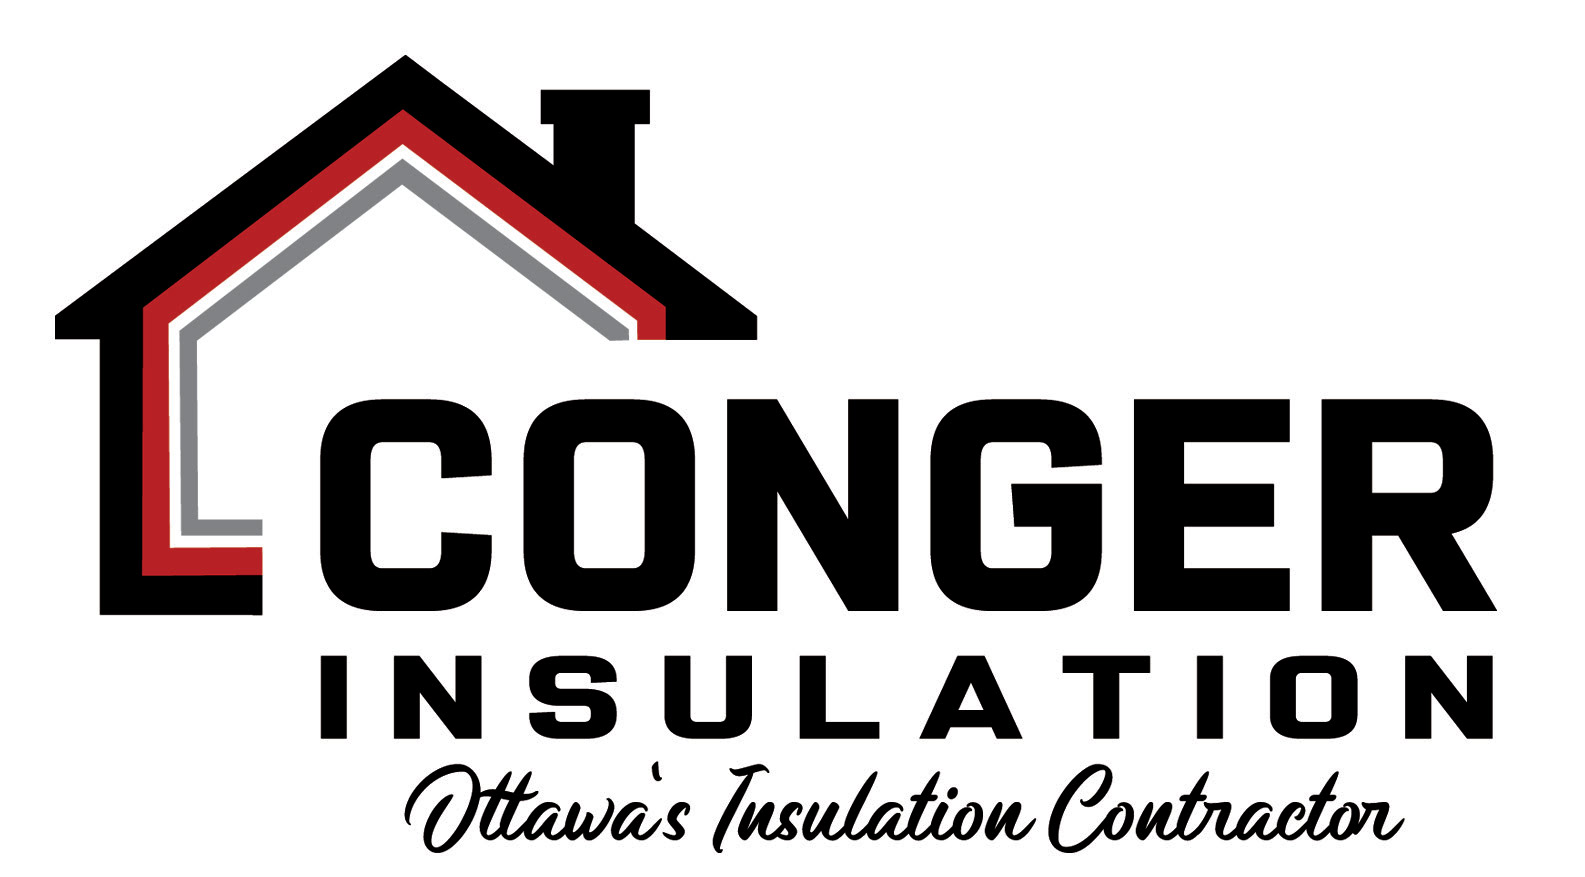 Ottawa Insulation Contractor logo - Conger Insulation Limited